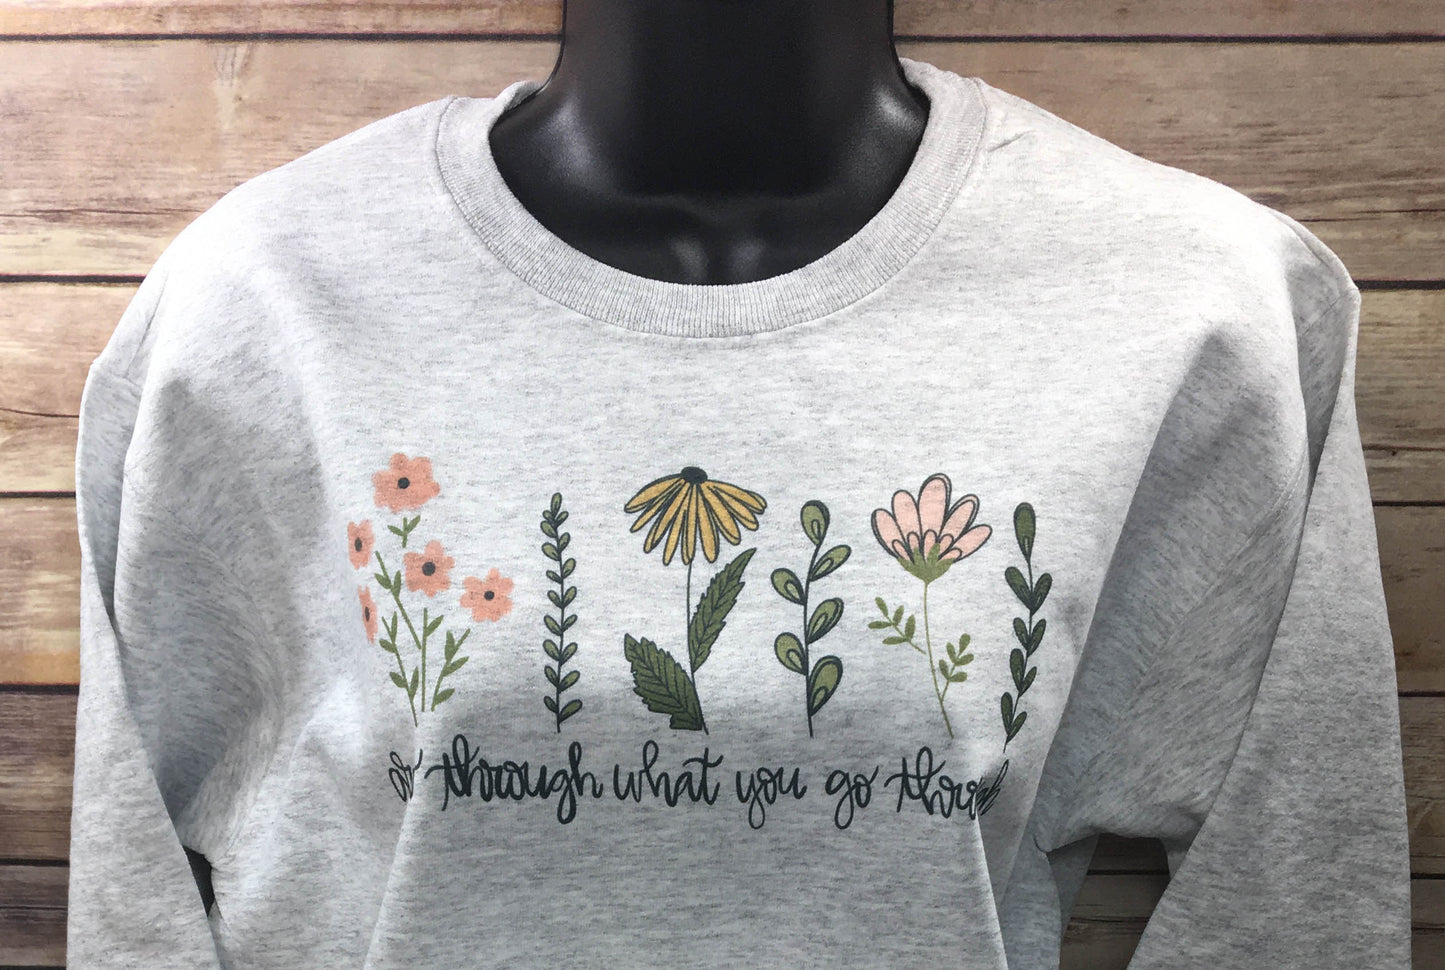 Grow Through What you Go Through boho floral t-shirt, sweatshirt, mug, bag set - FREE SHIPPING